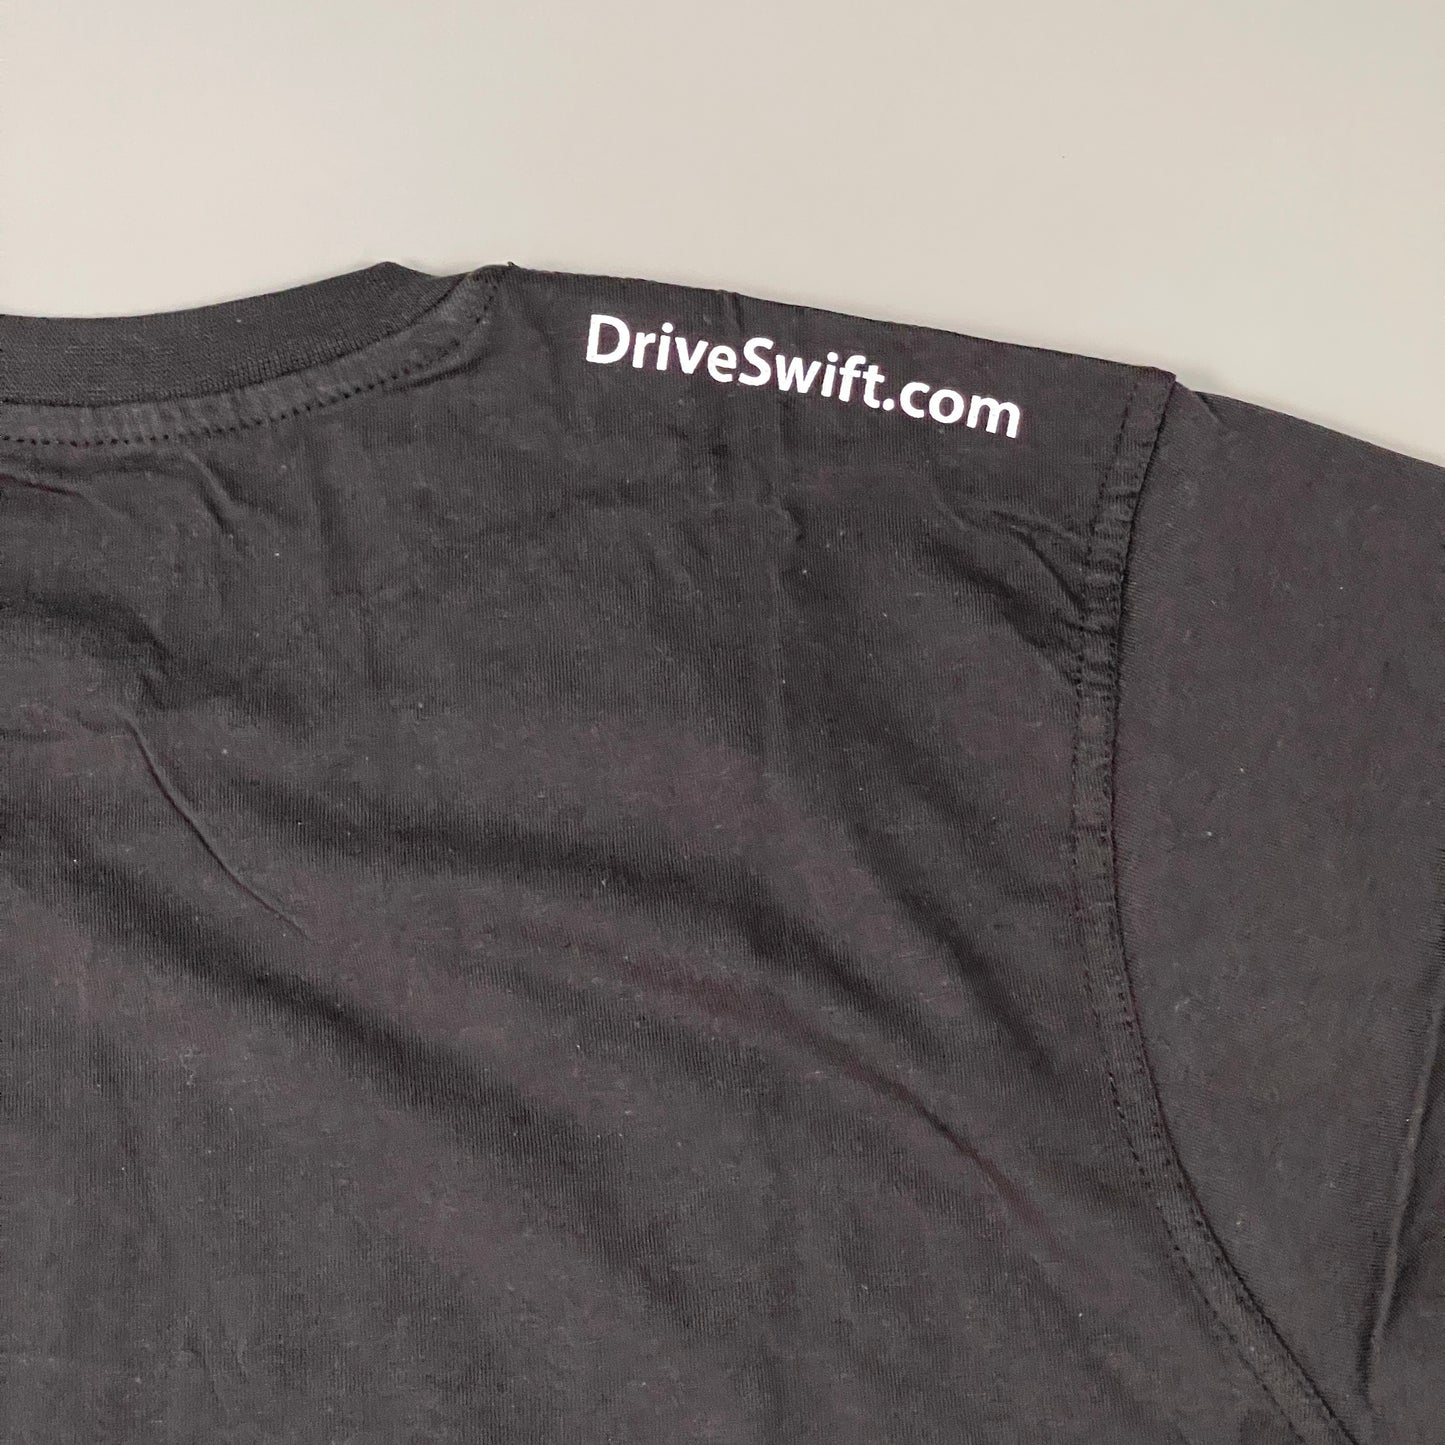 SWIFT Transportation Driver T-Shirt w/Pocket Unisex Sz M Black SW-170 (New Other)